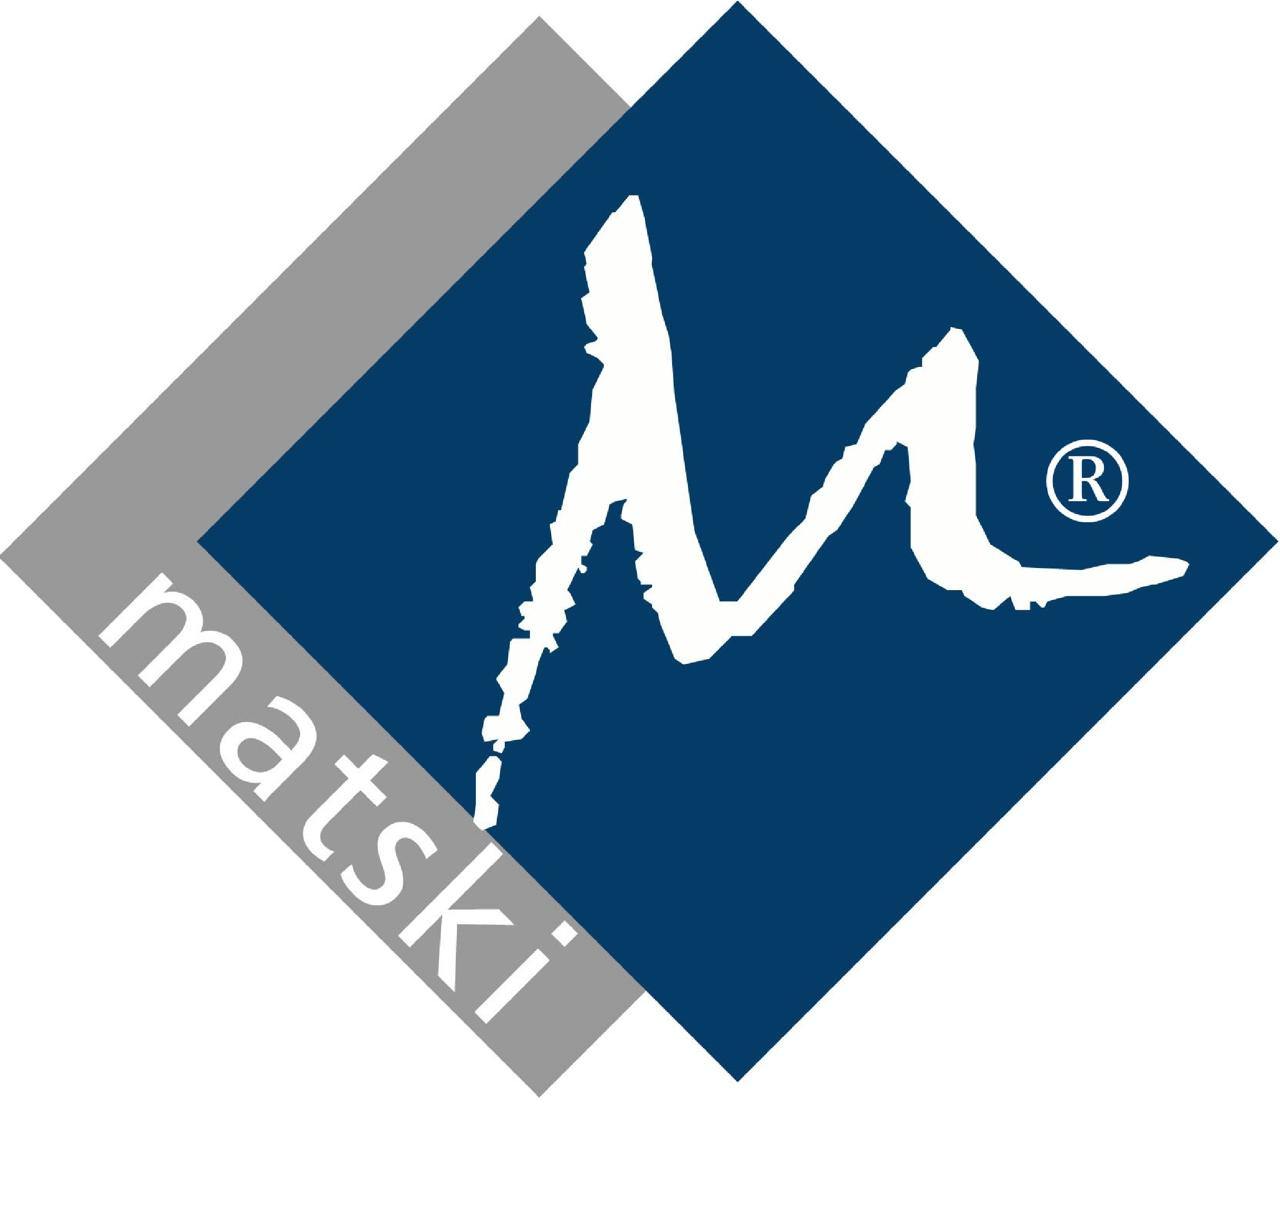 Matski Trading LLC 